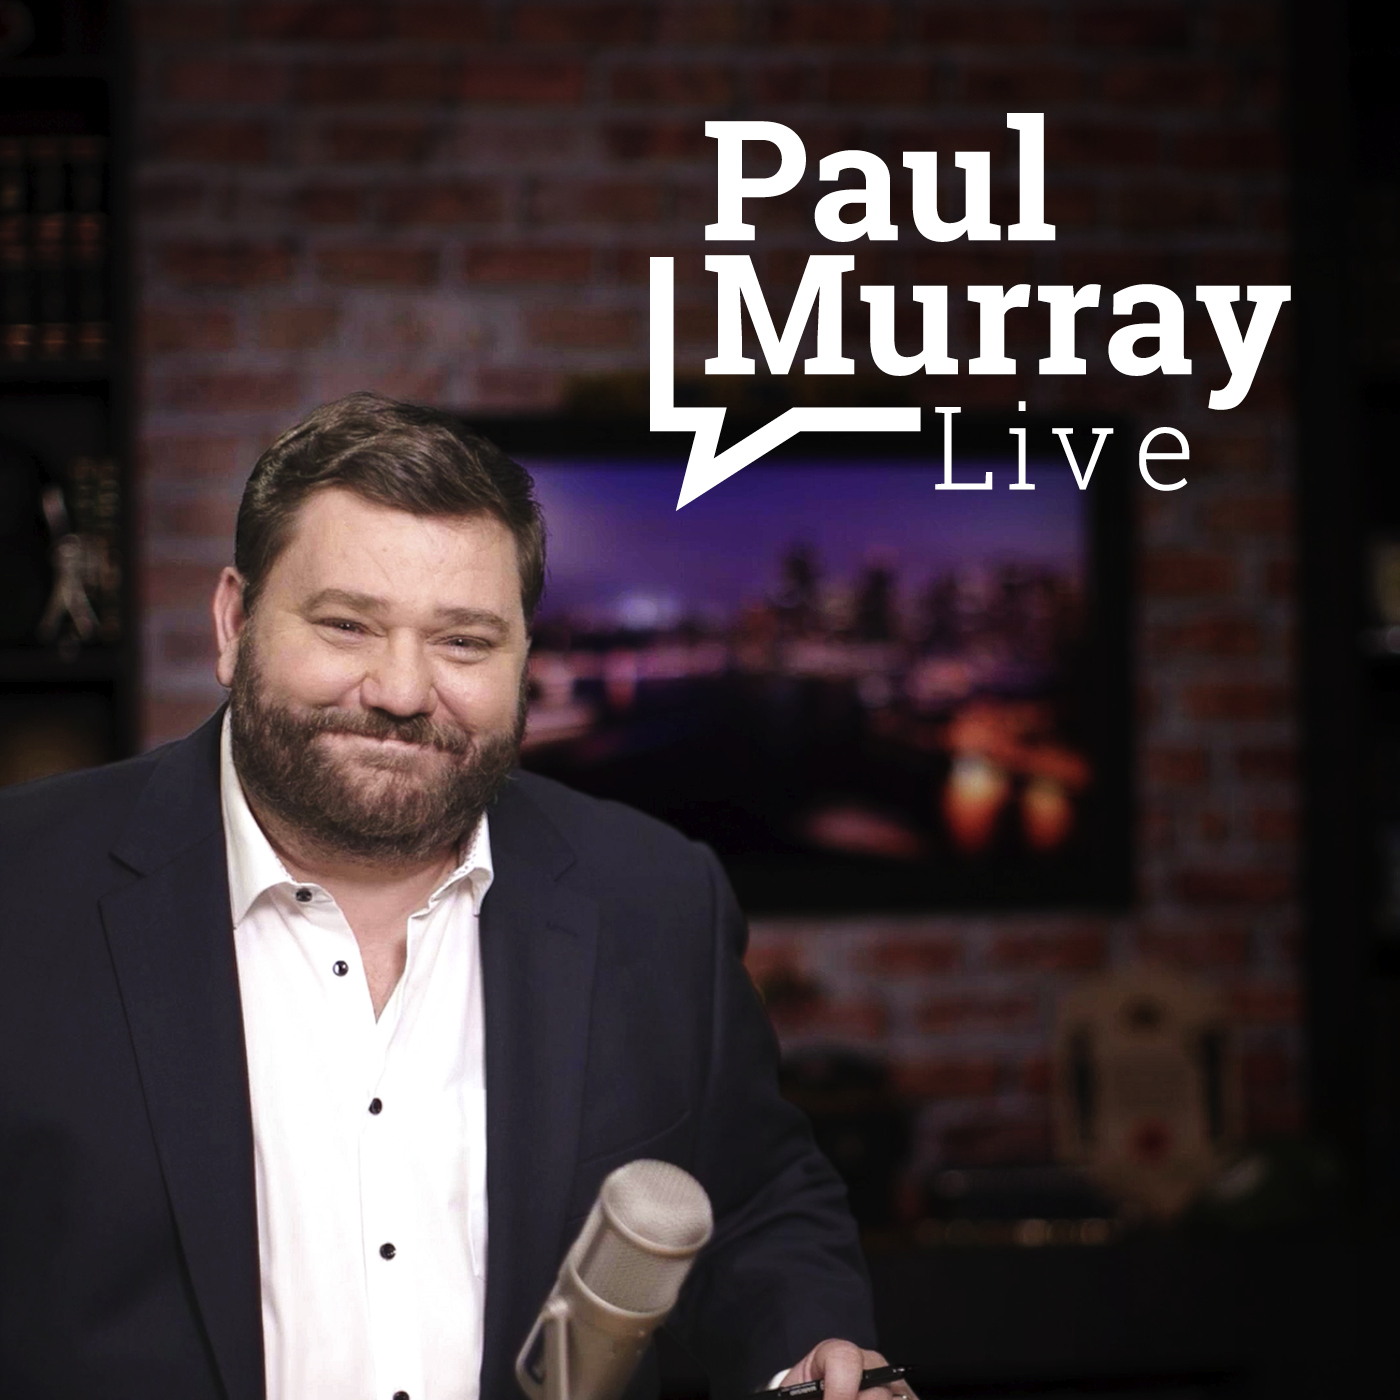 Paul Murray Live, Monday 20th September